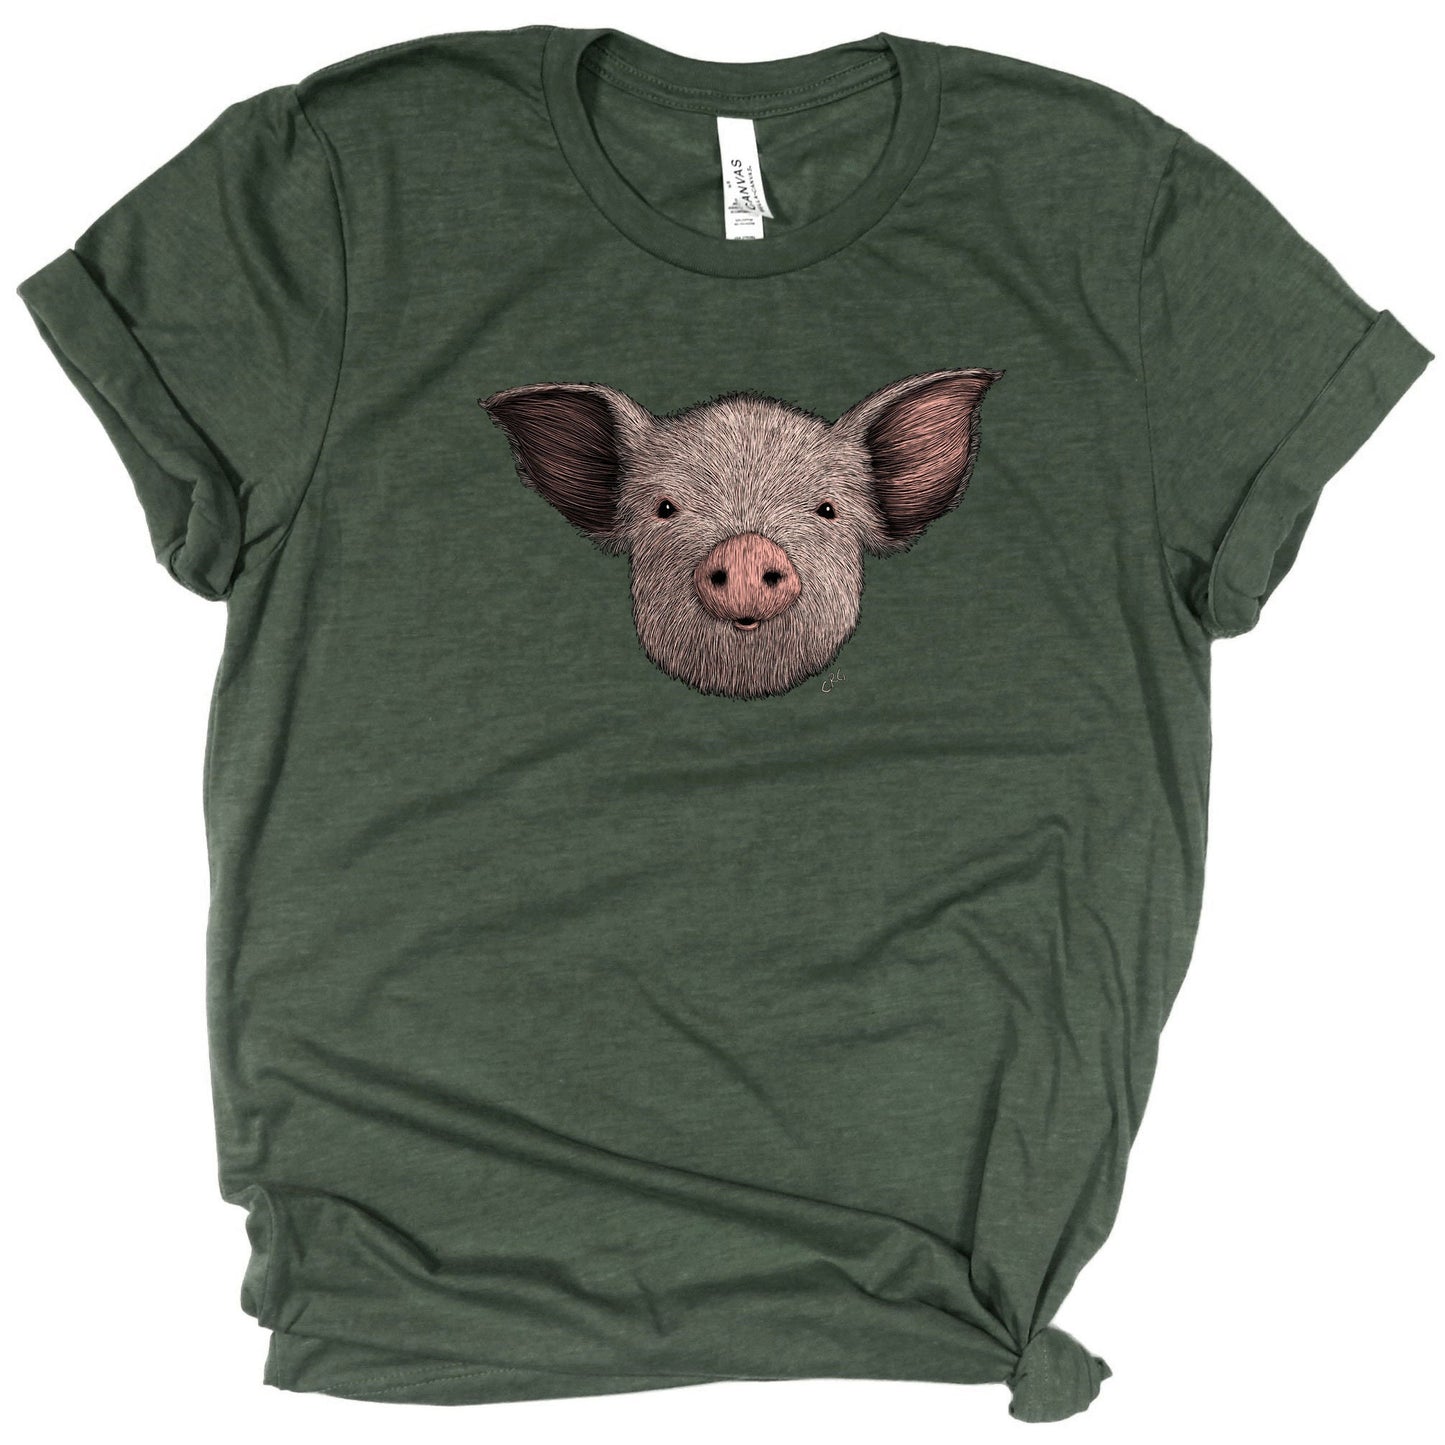 Cute Baby Pig Shirt